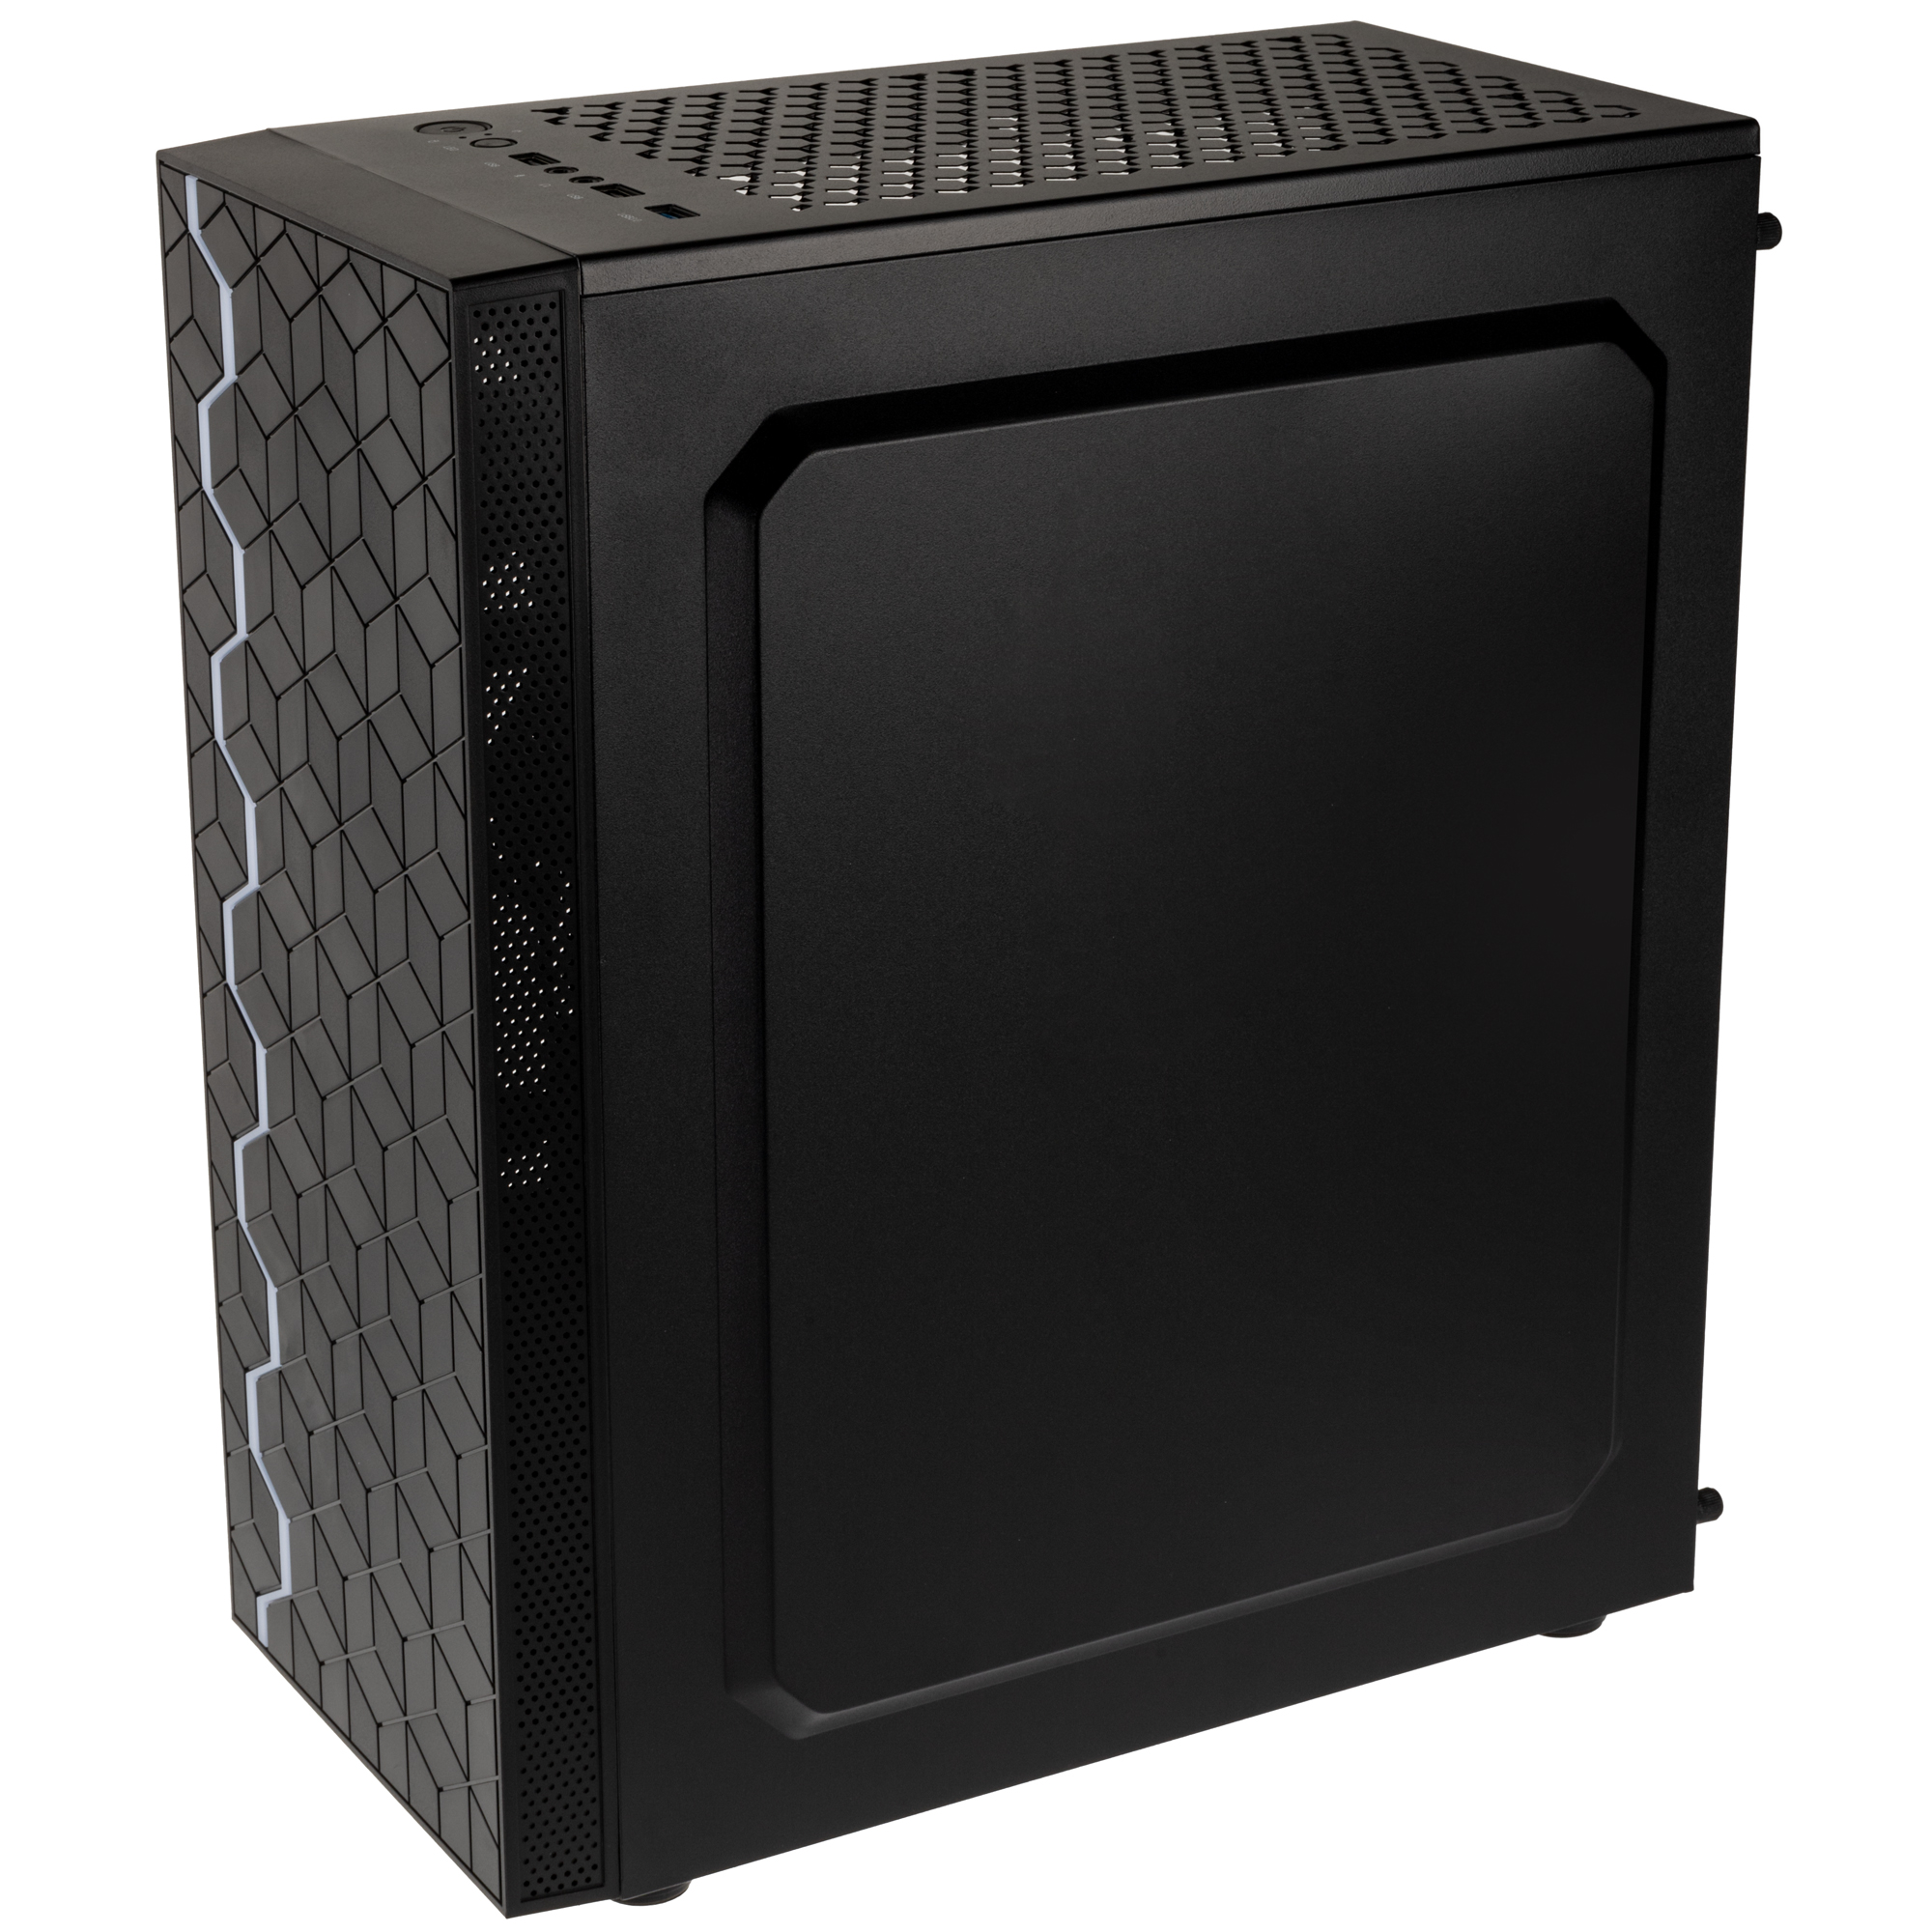 Kolink - Kolink Inspire Series K8 ARGB Midi Tower Gaming Case - Black